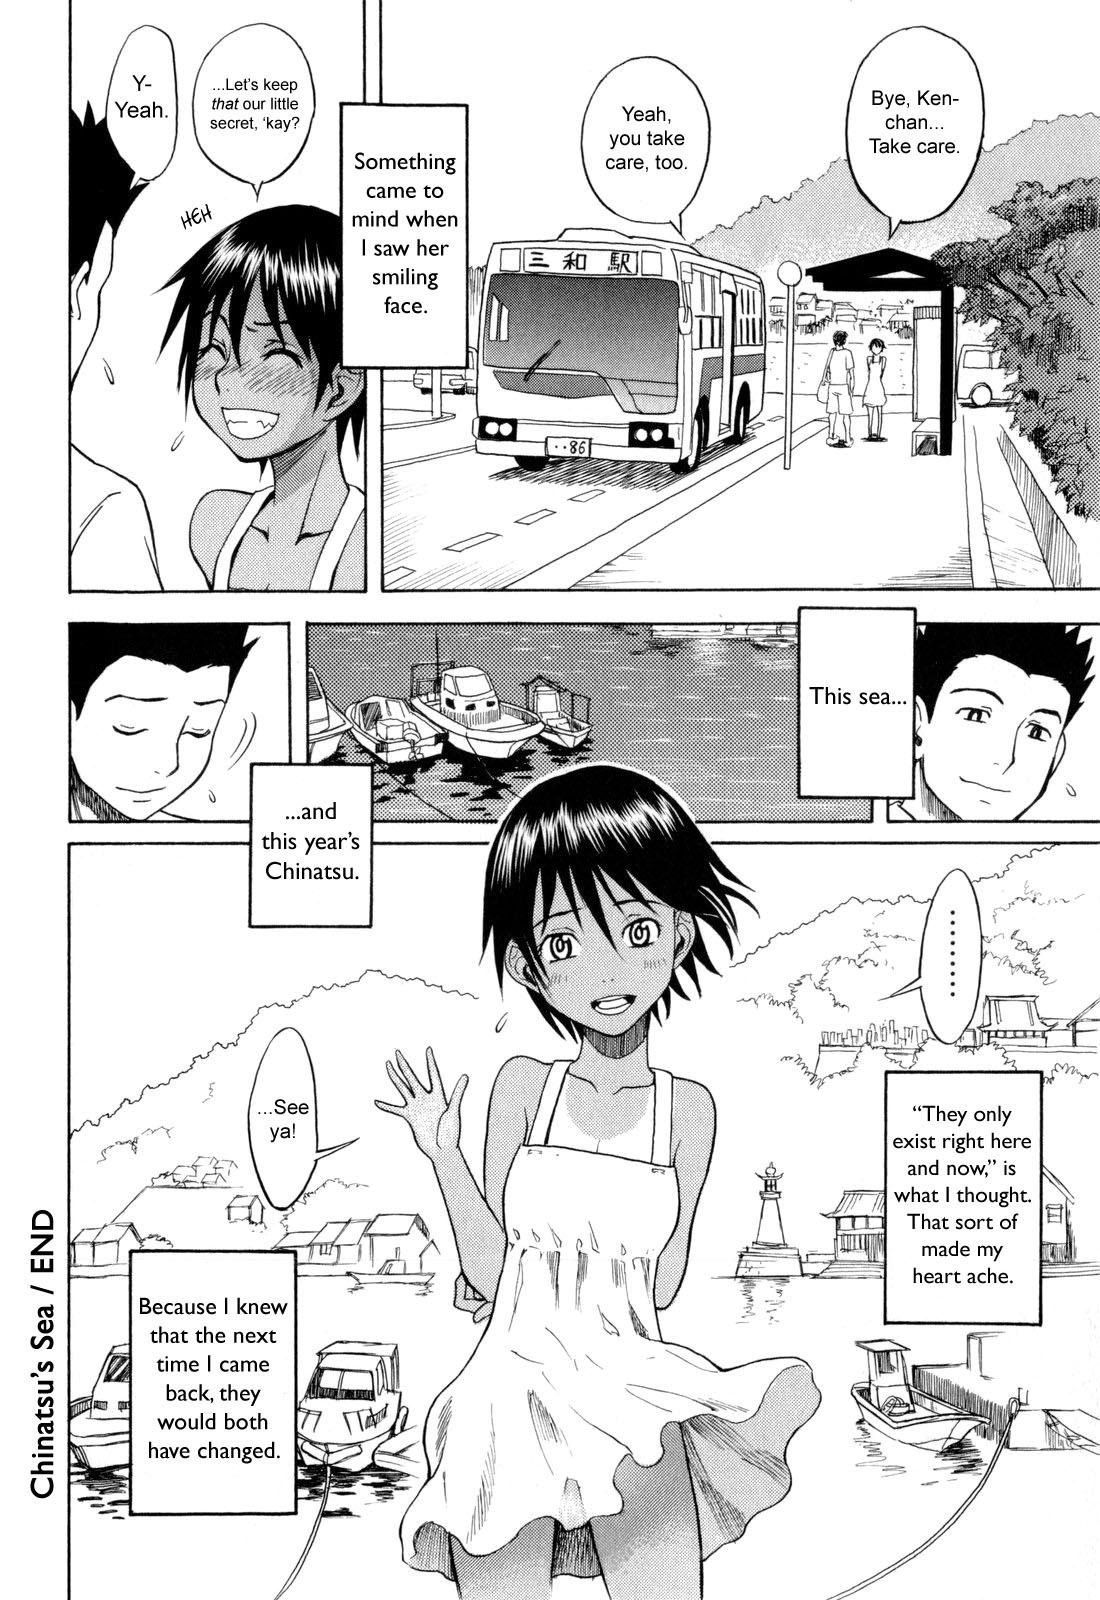 Follada Chinatsu's Sea Rope - Page 20